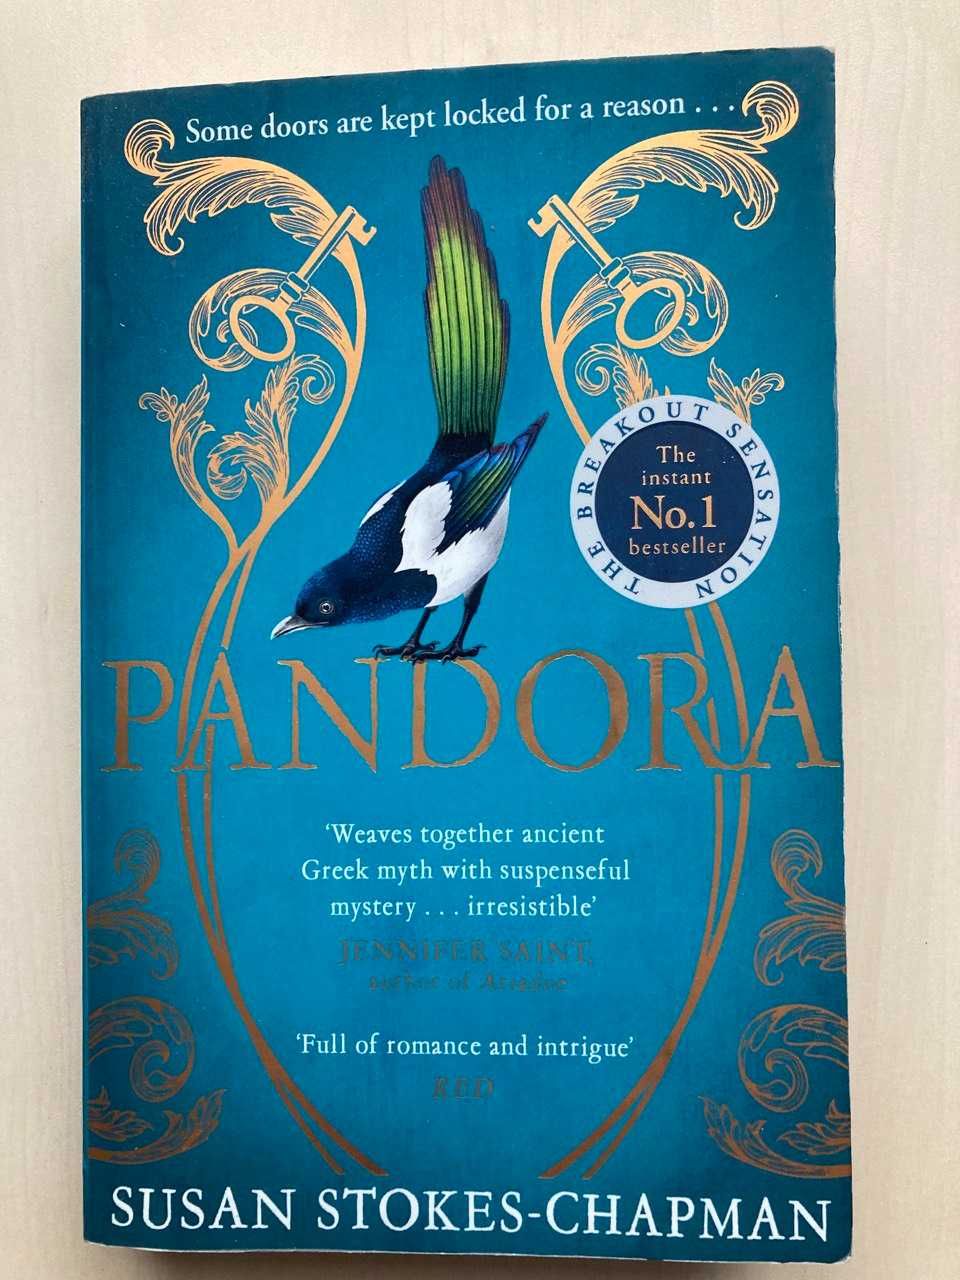 Книга "Pandora”, Susan Stokes-Chapman